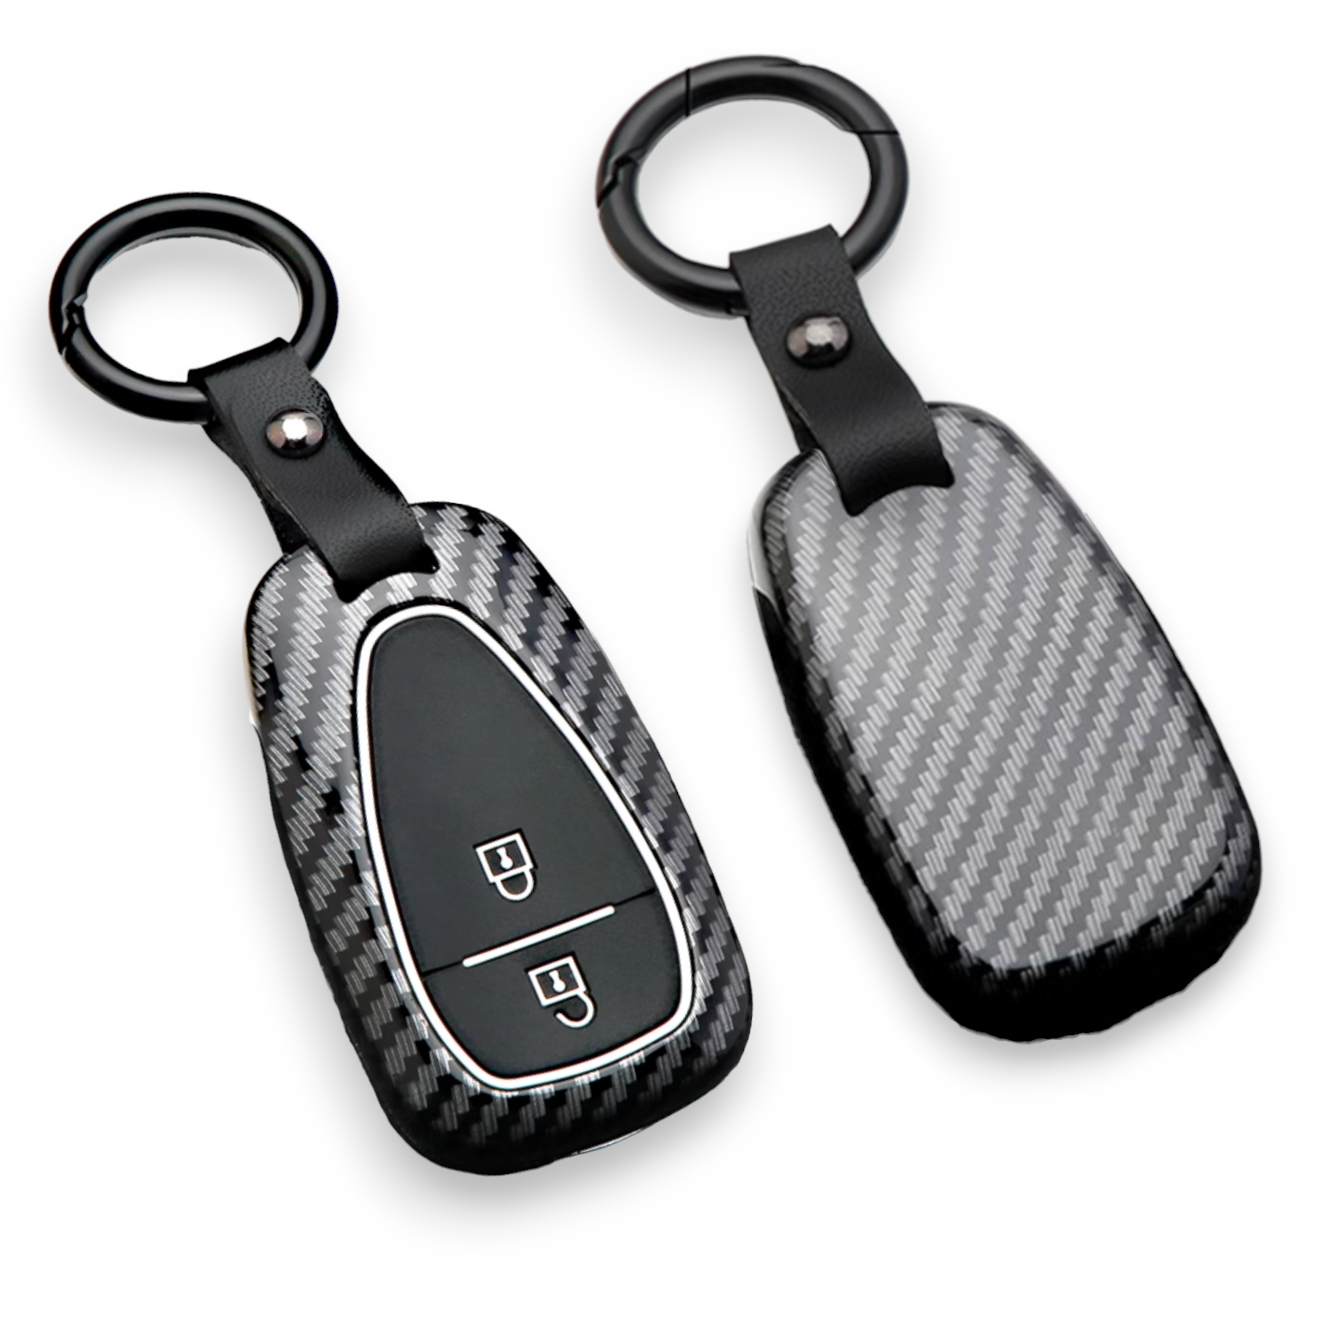 Holden and Chevrolet Key Cover | Astra, Cruze, Trax, Commodore, Calais | carbon key fob cover accessory